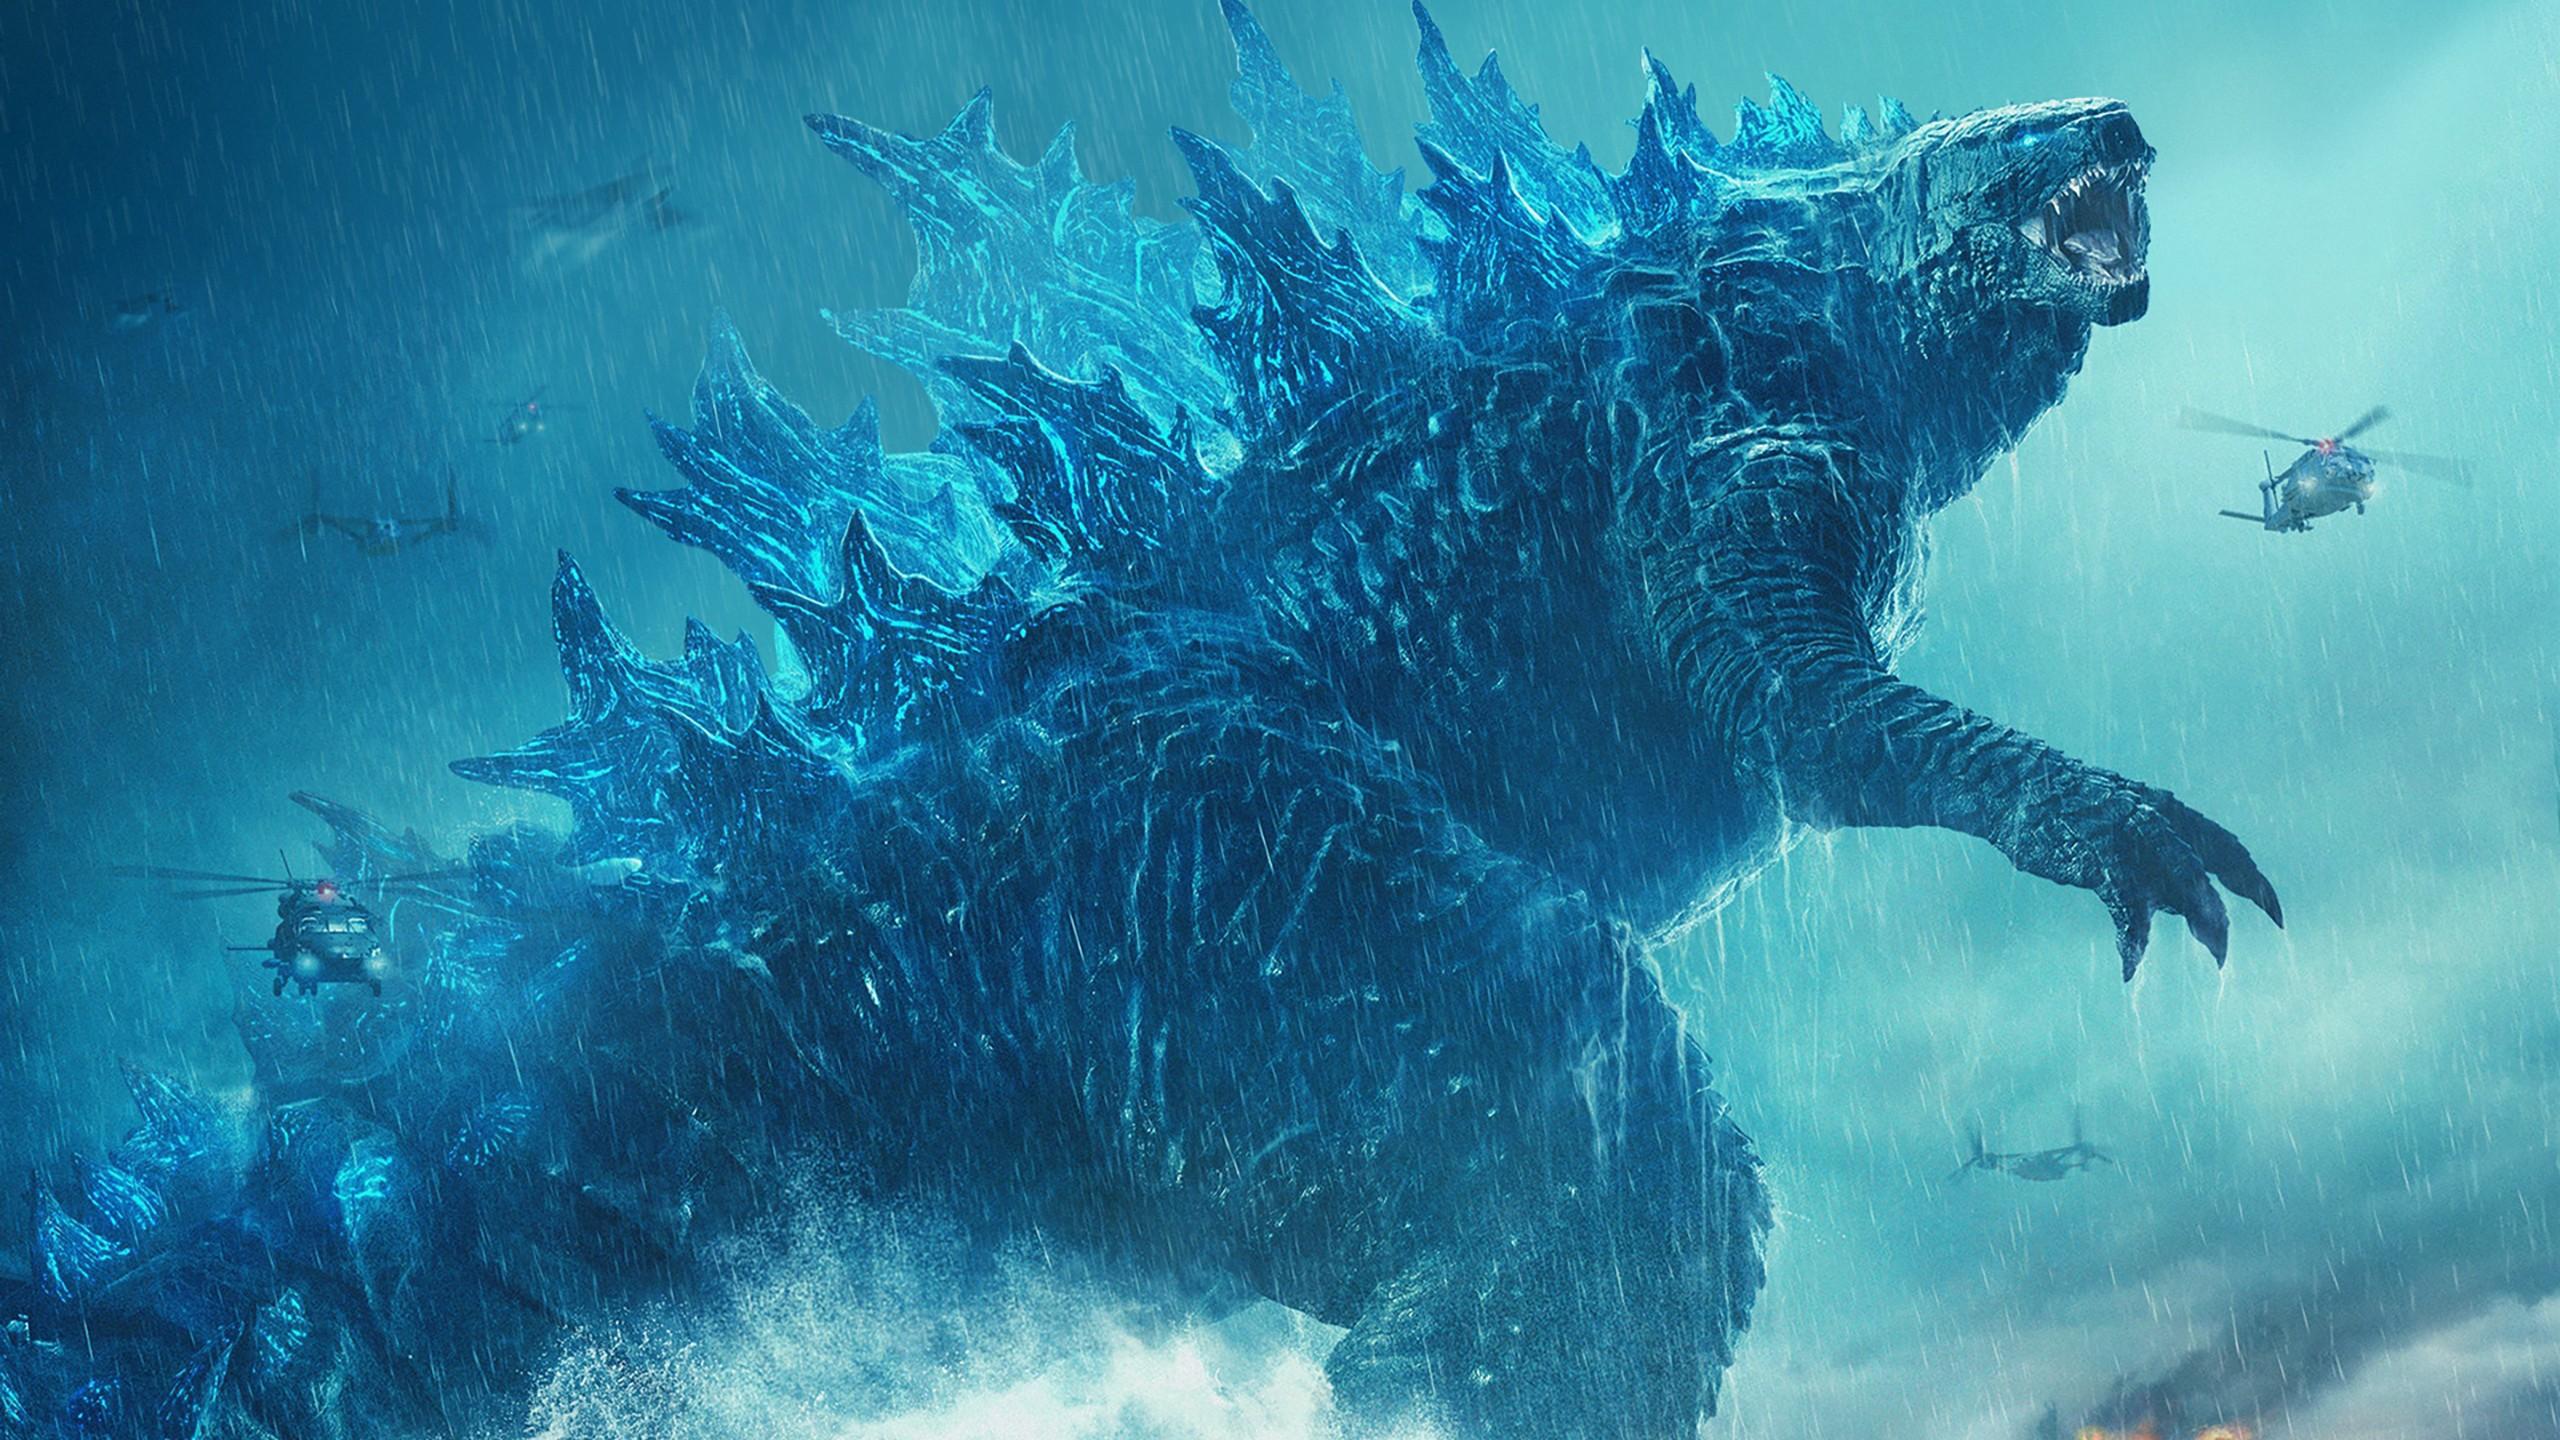 Godzilla vs King Ghidorah 4K Wallpaper